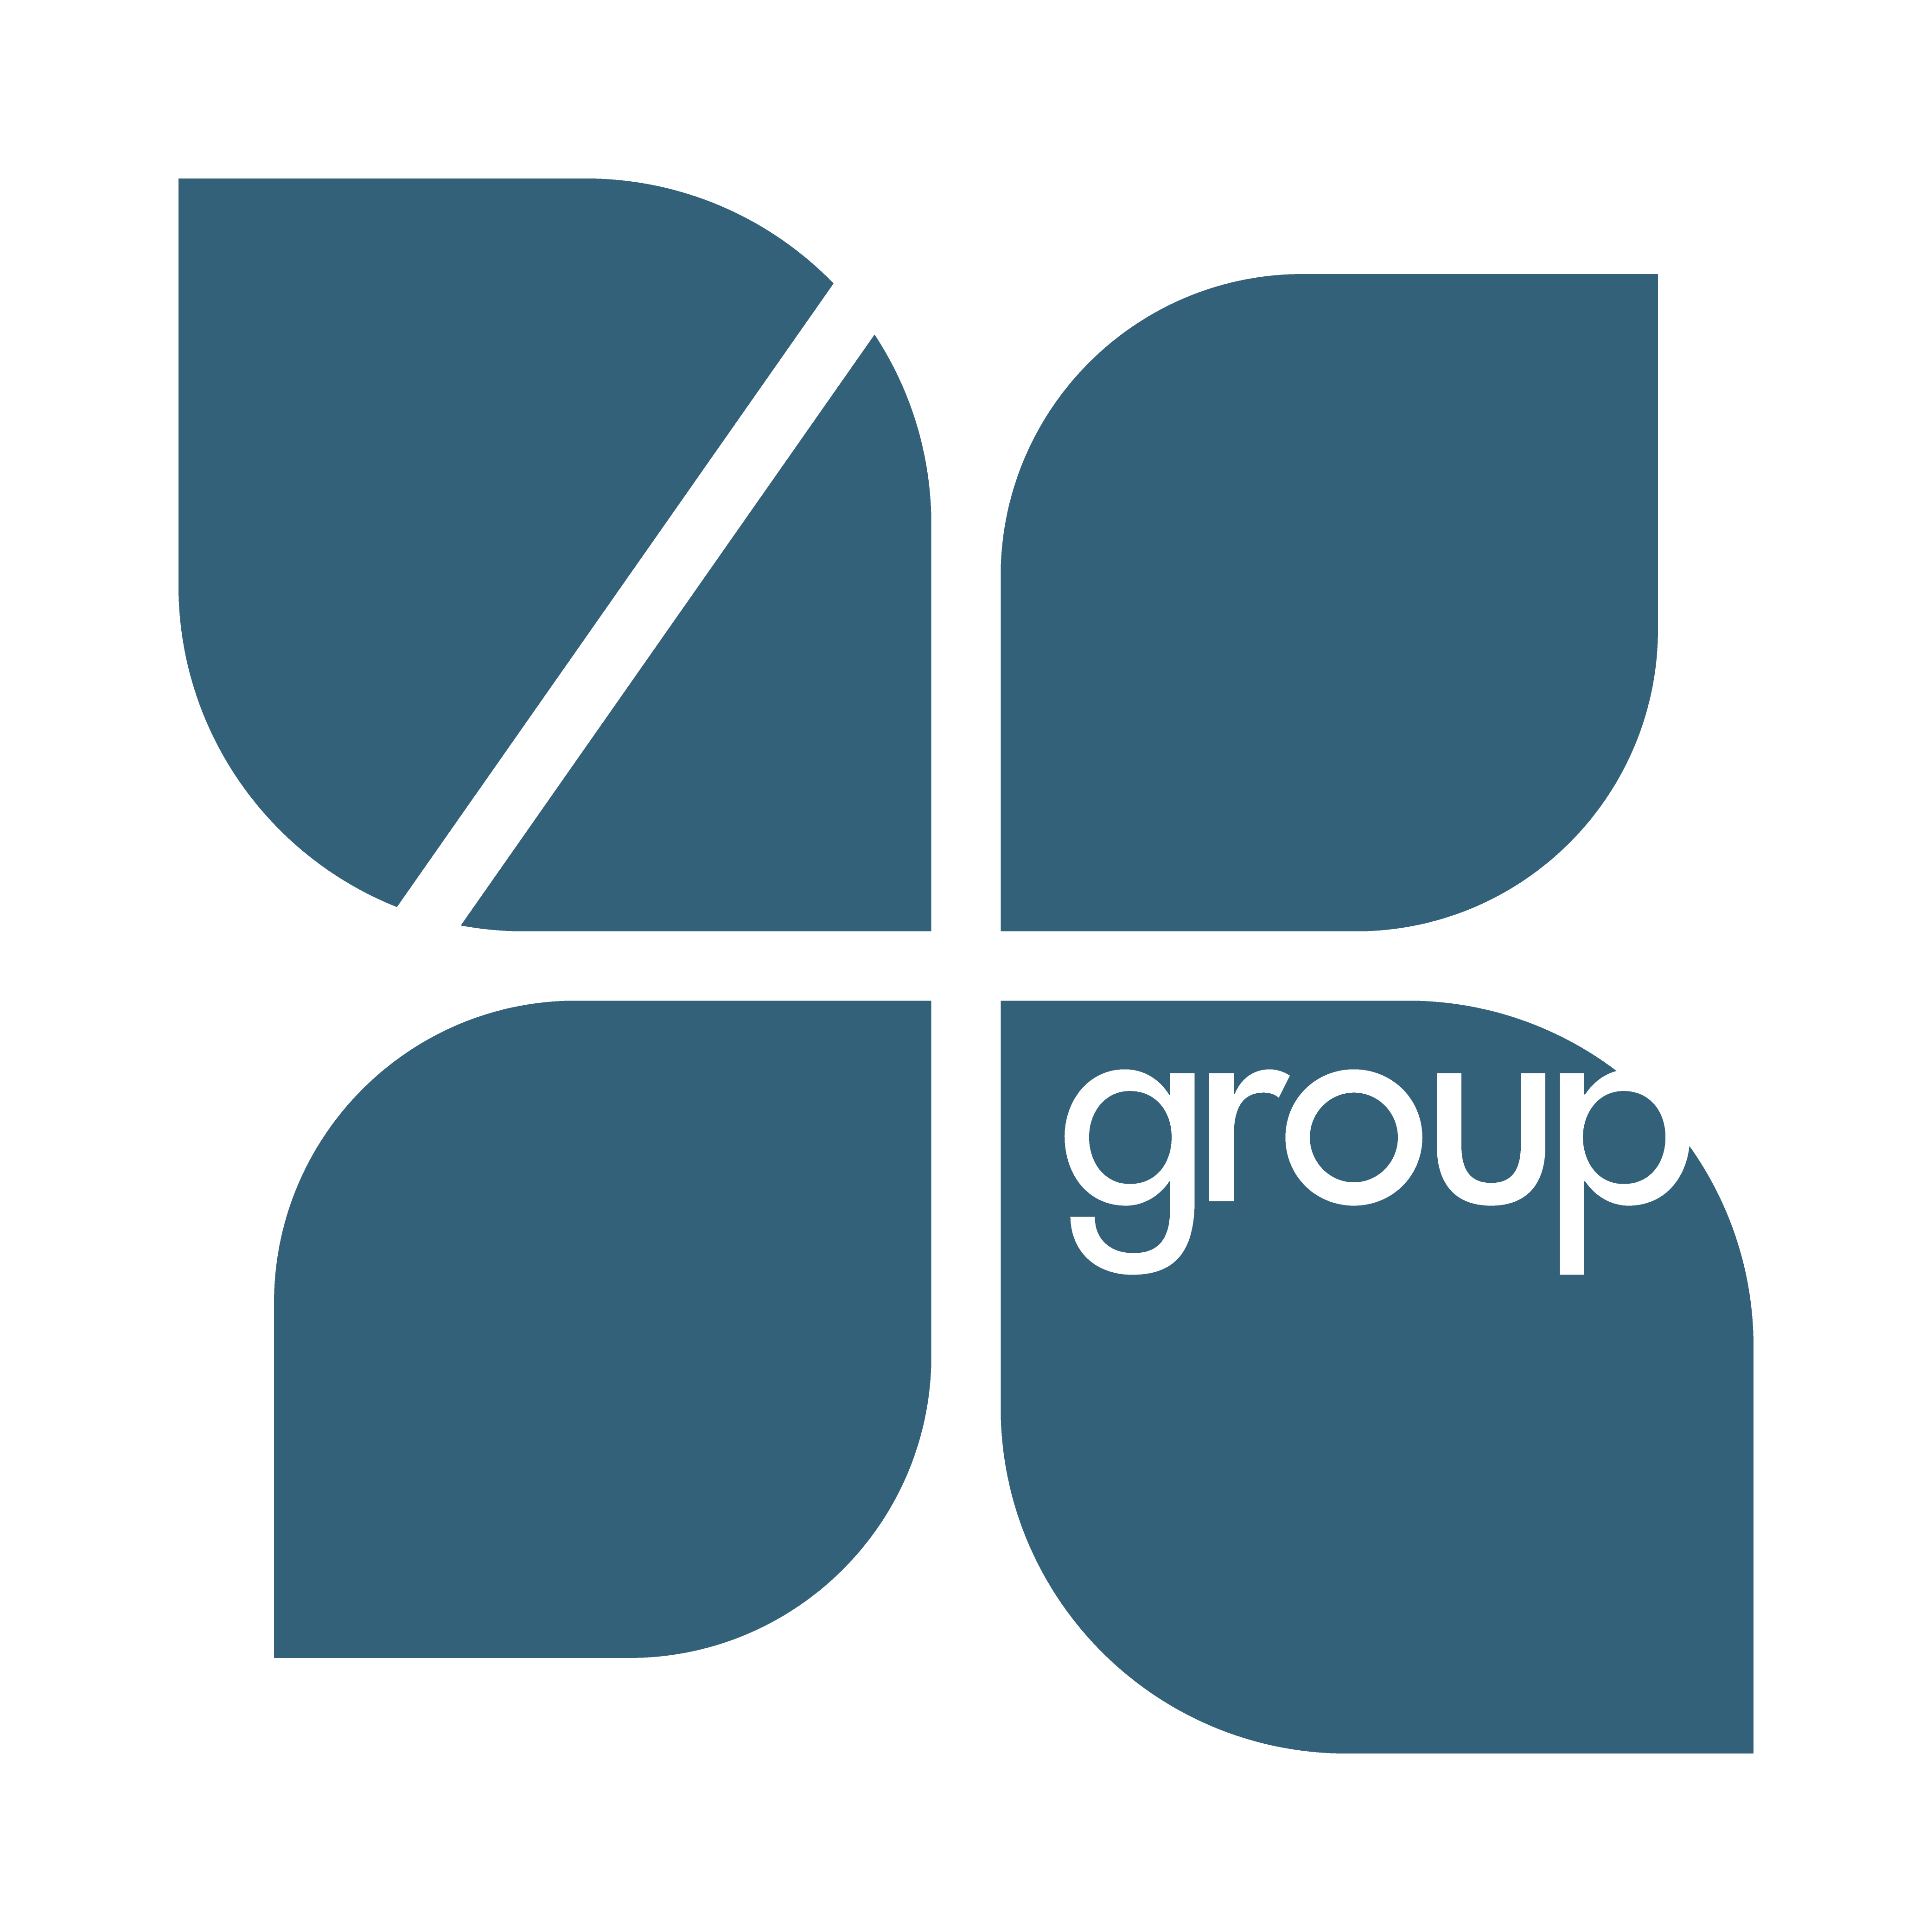 4Group (Organization)